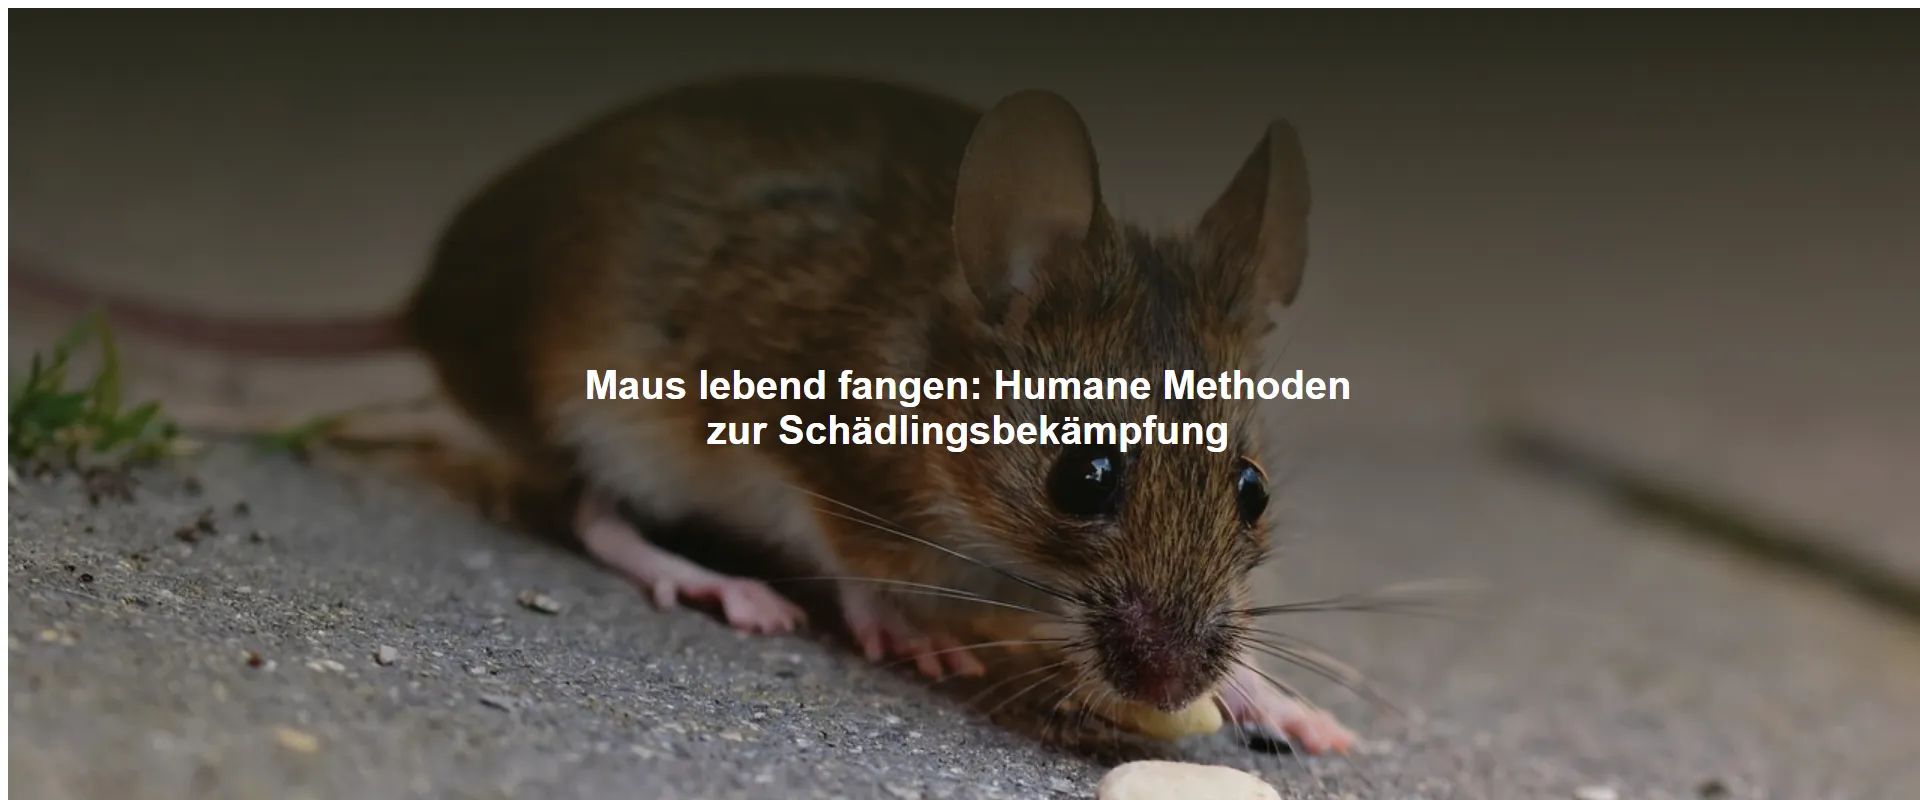 Maus lebend fangen – Humane Methoden zur Schädlingsbekämpfung